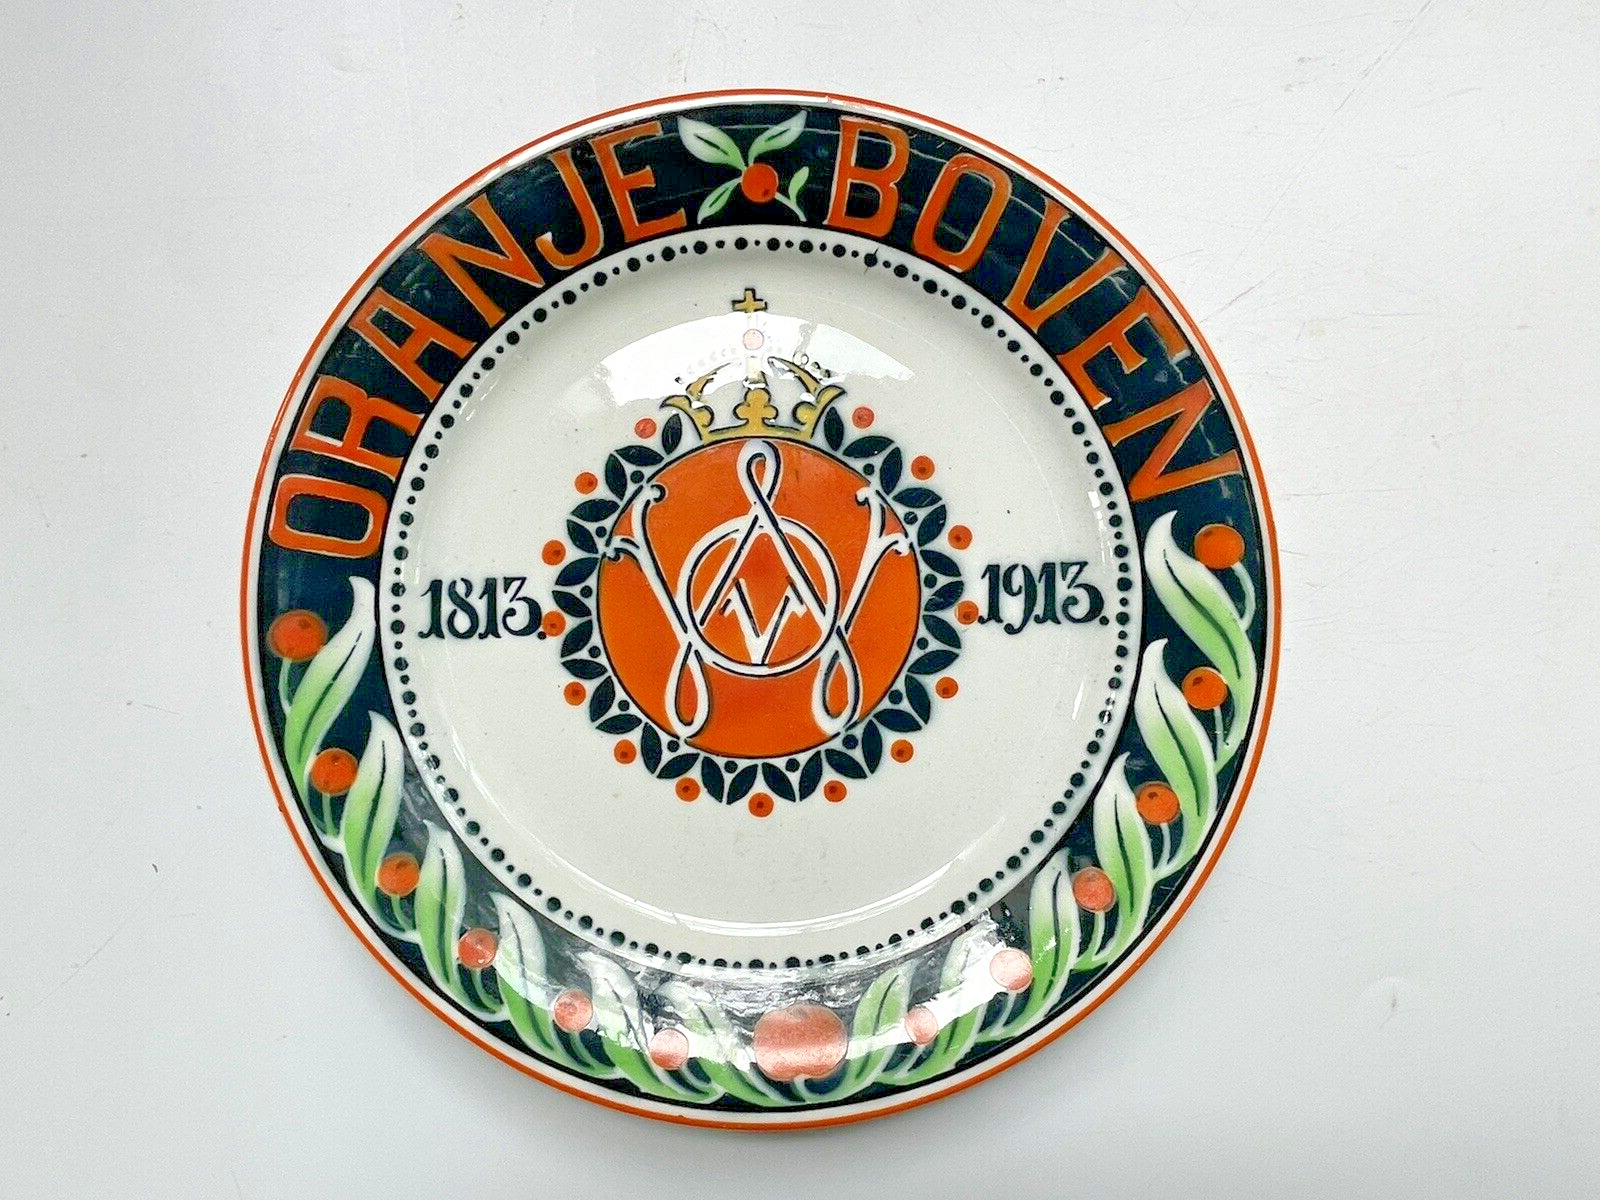 Oranje Boven 1813-1913 Commerative Plate Royal Sphinx Netherlands Dutch Plaque